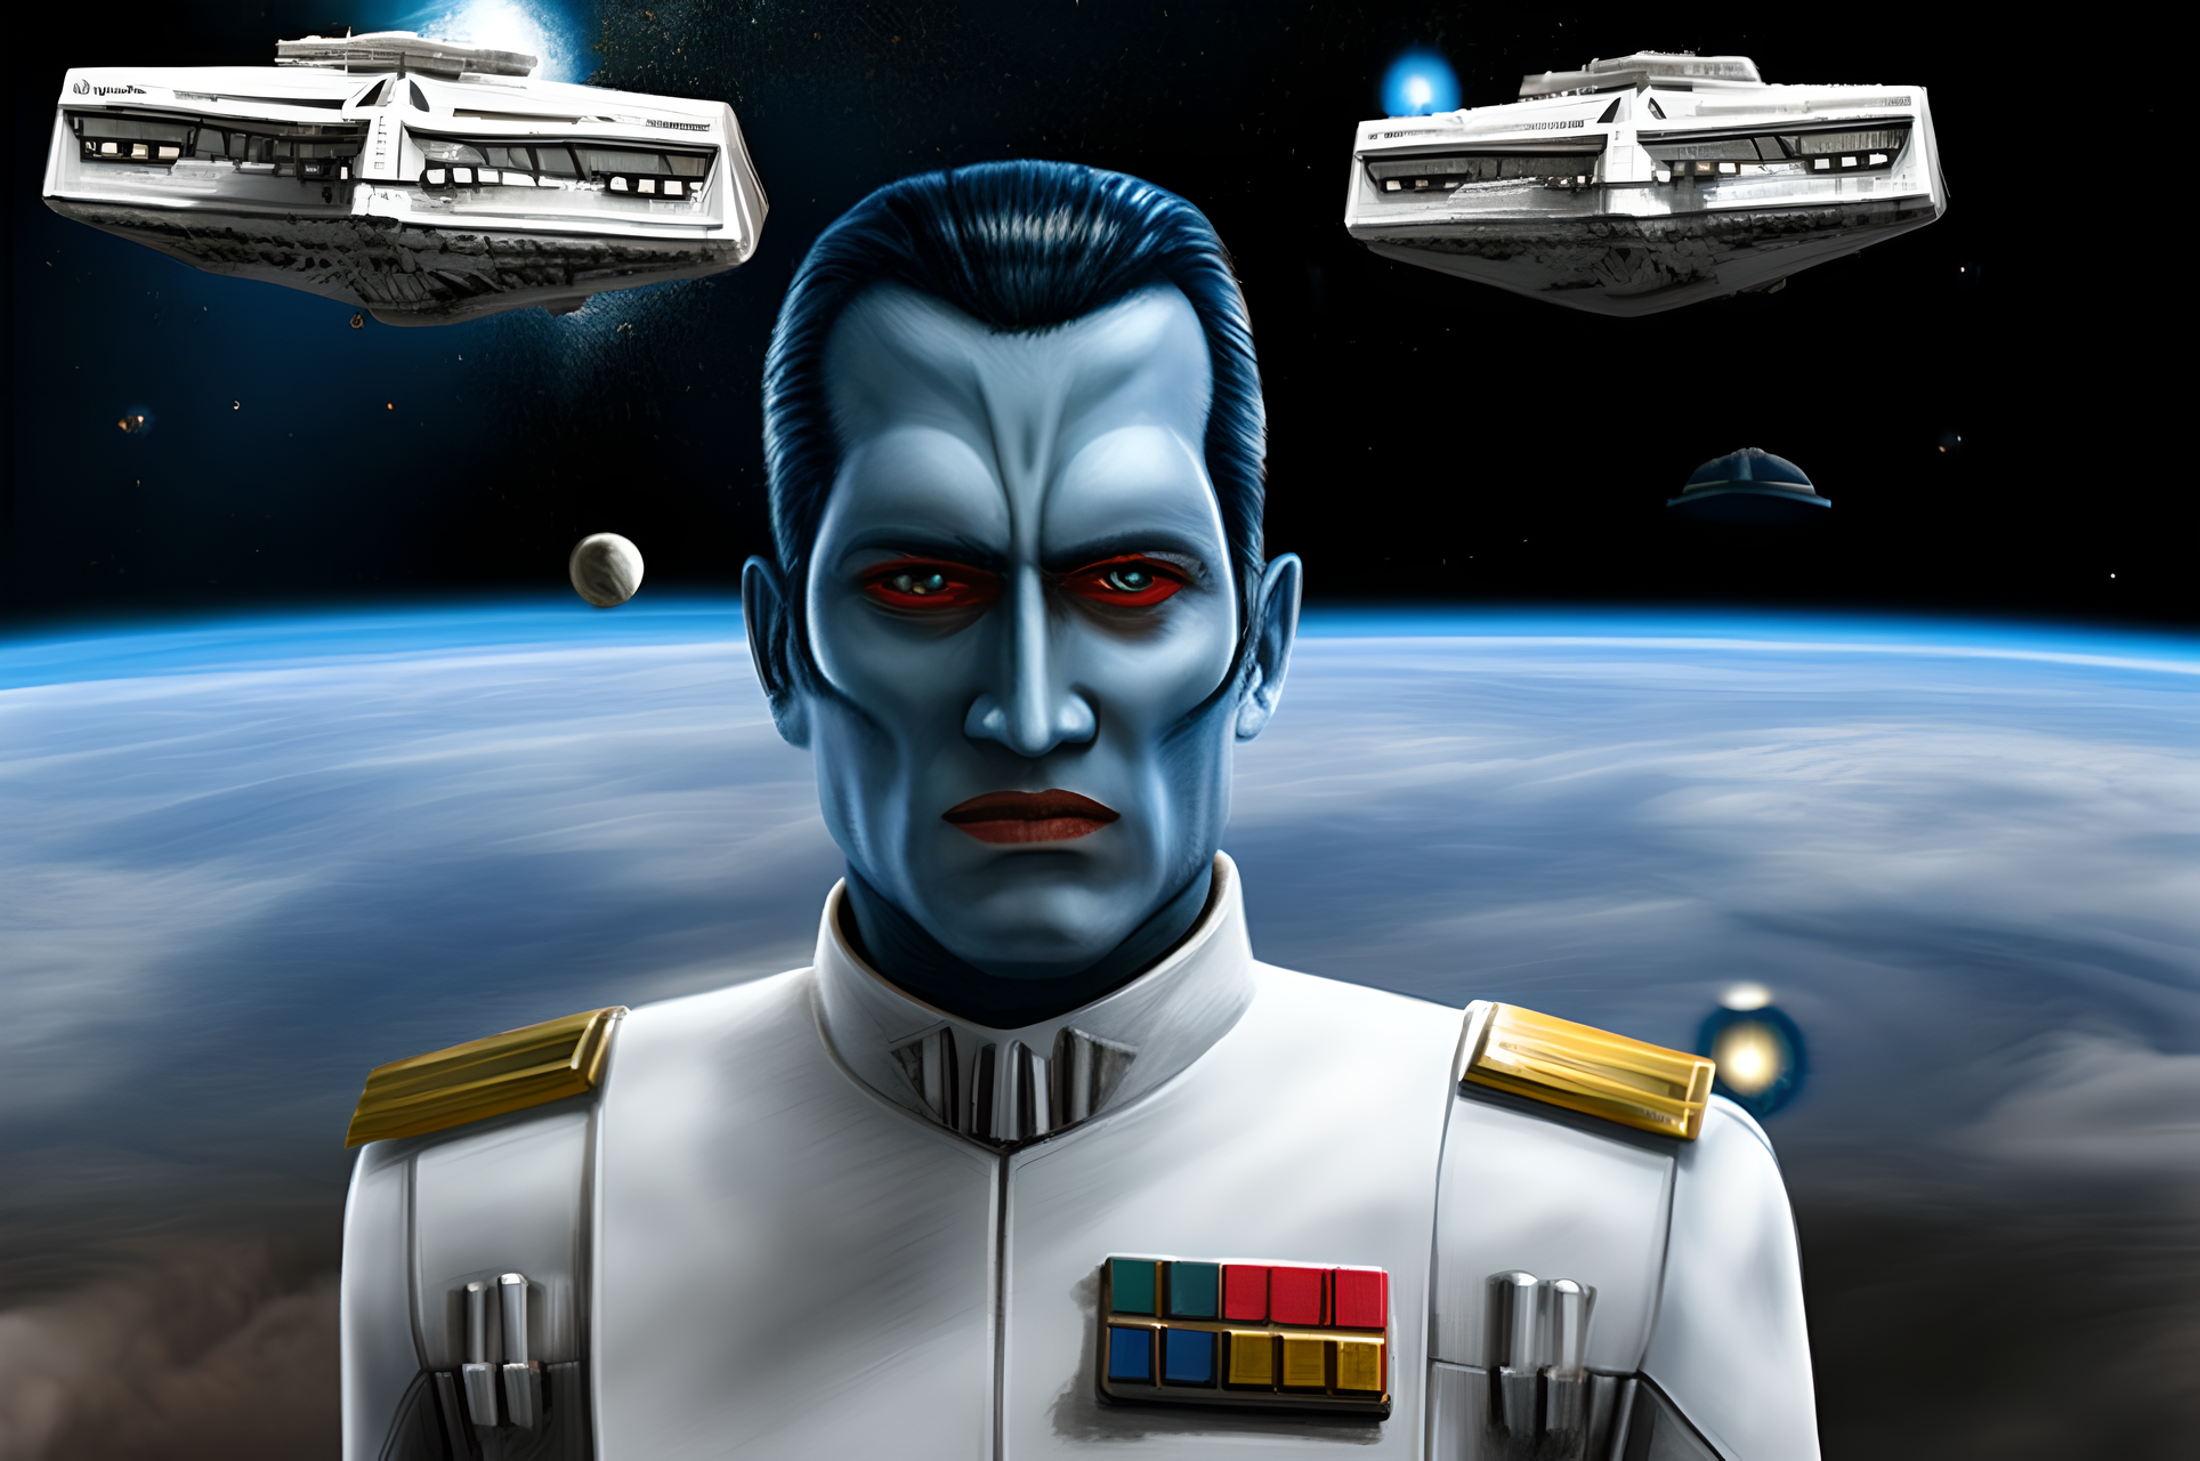 Grand Admiral Thrawn | Star Wars image by Jek1466